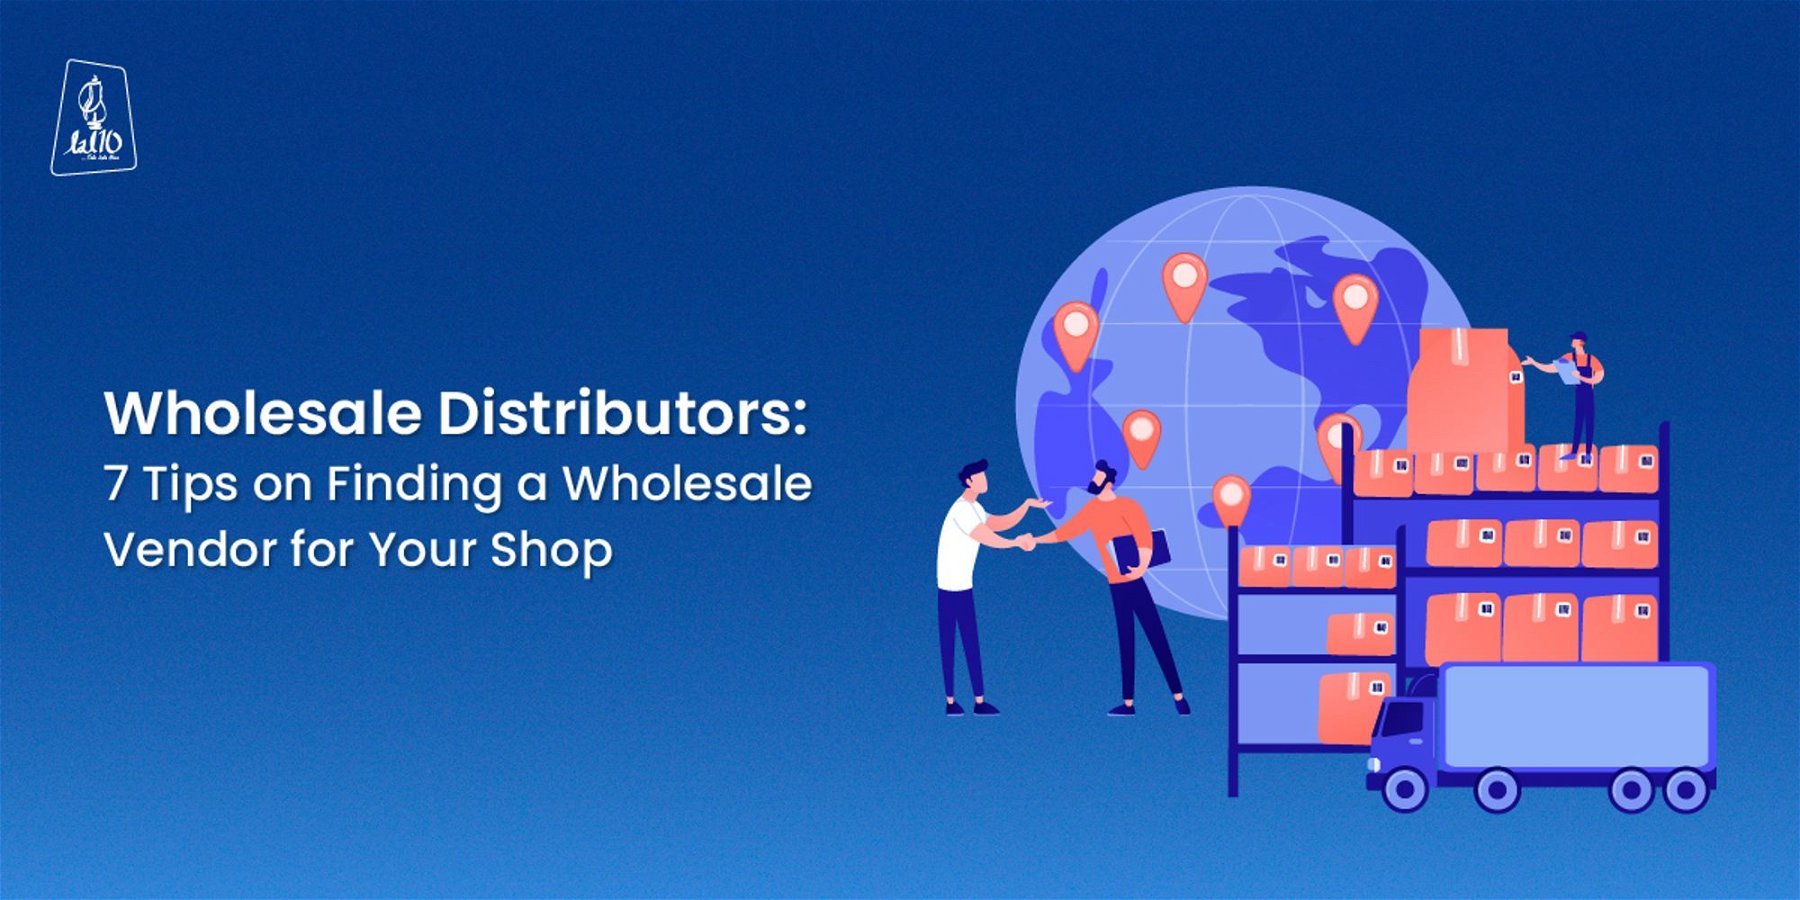 Wholesale Distributors: 7 Tips on Finding a Wholesale Vendor for Your Shop